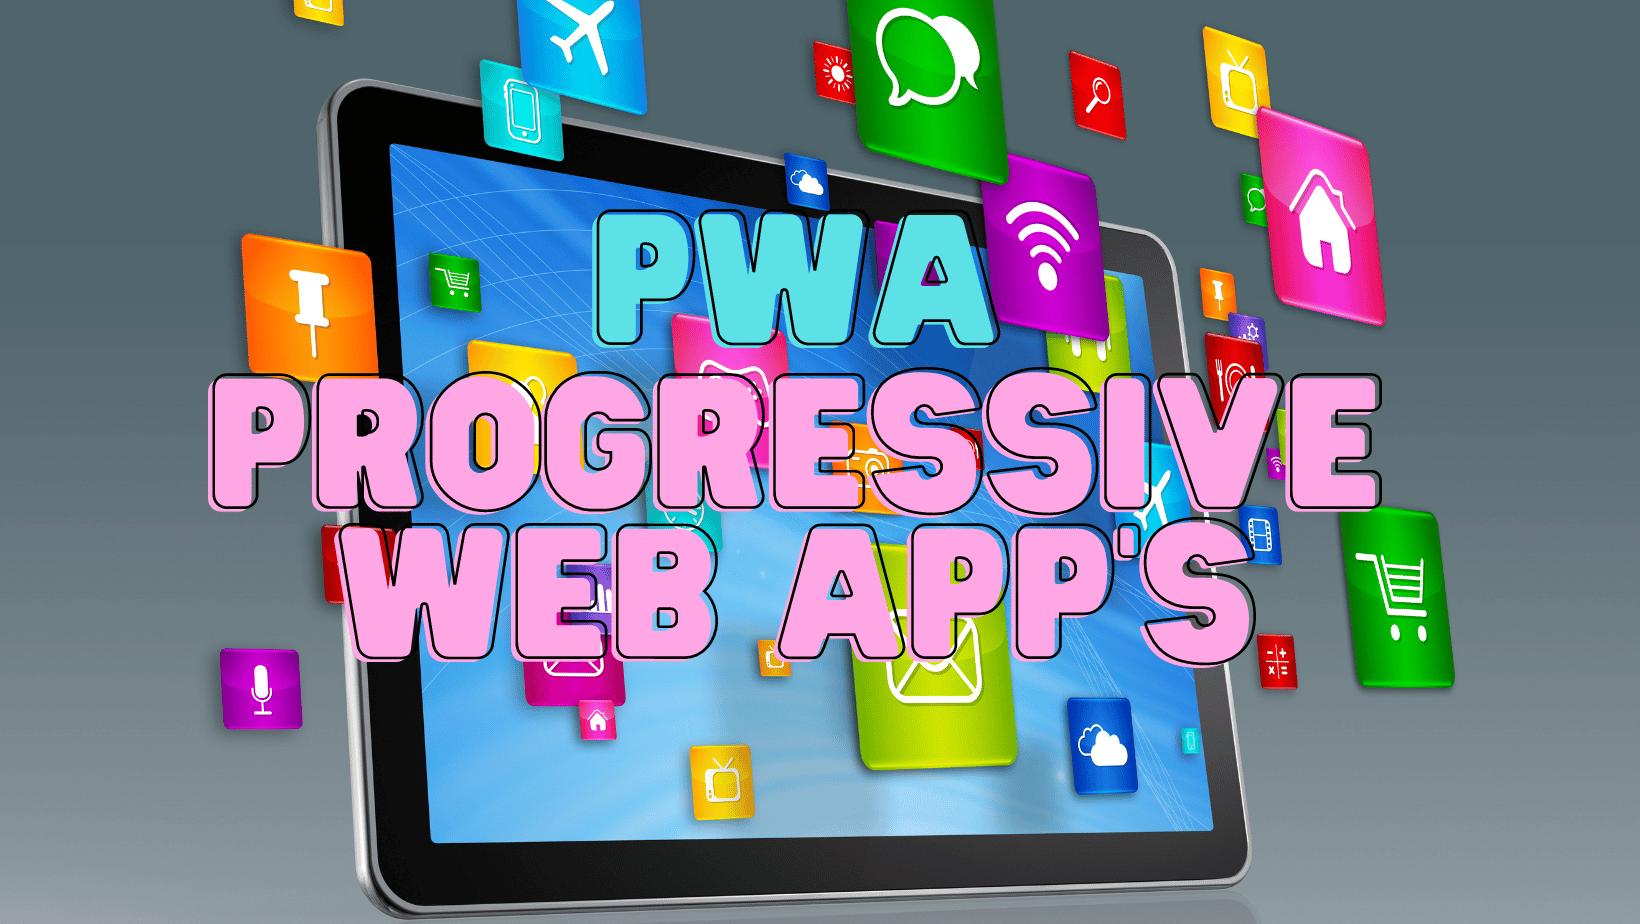 A tablet with progressive web apps written on it